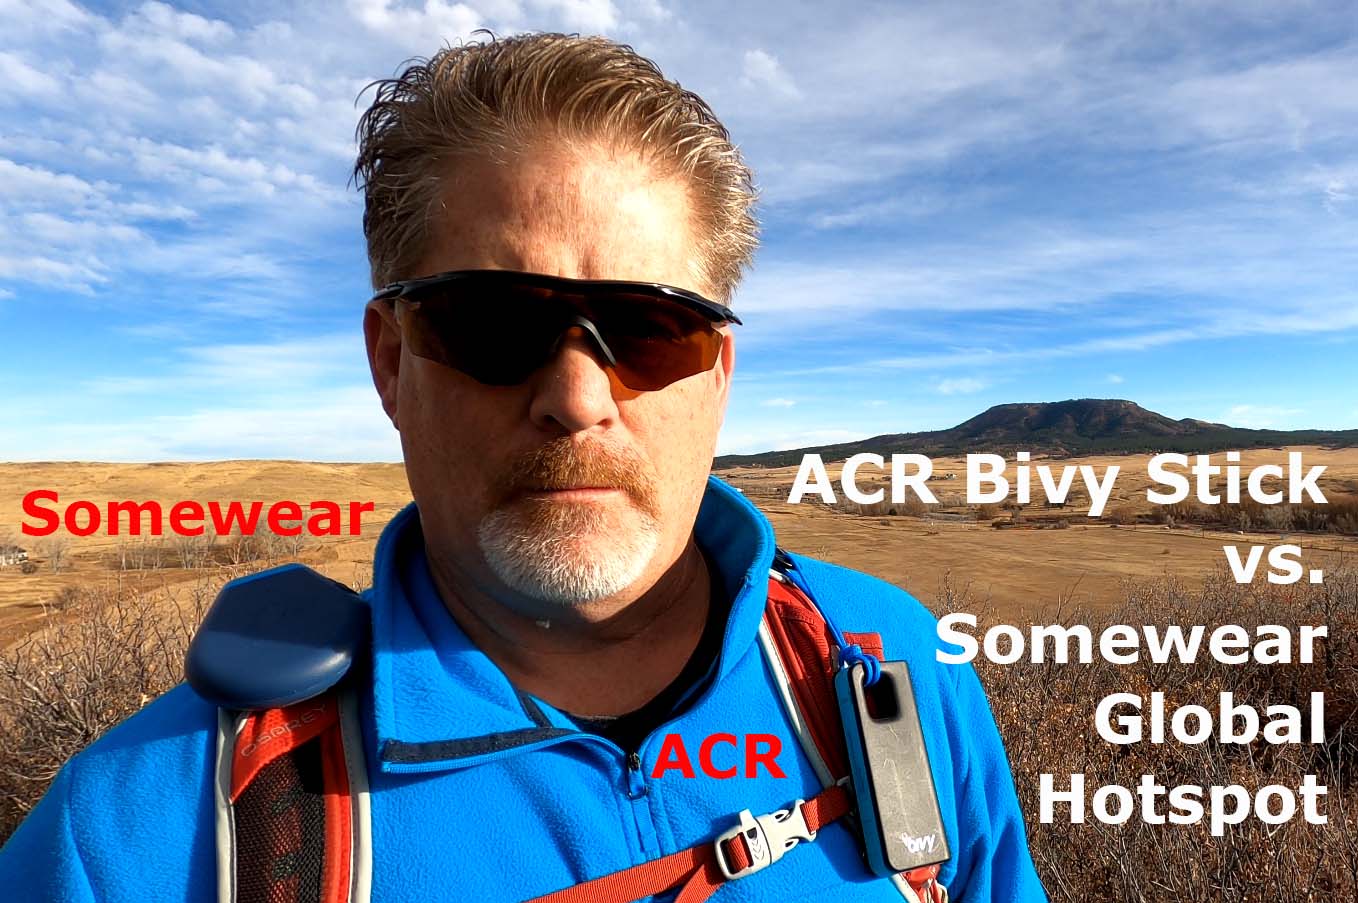 ACR Bivy Stick vs Somewear Global Hotspot